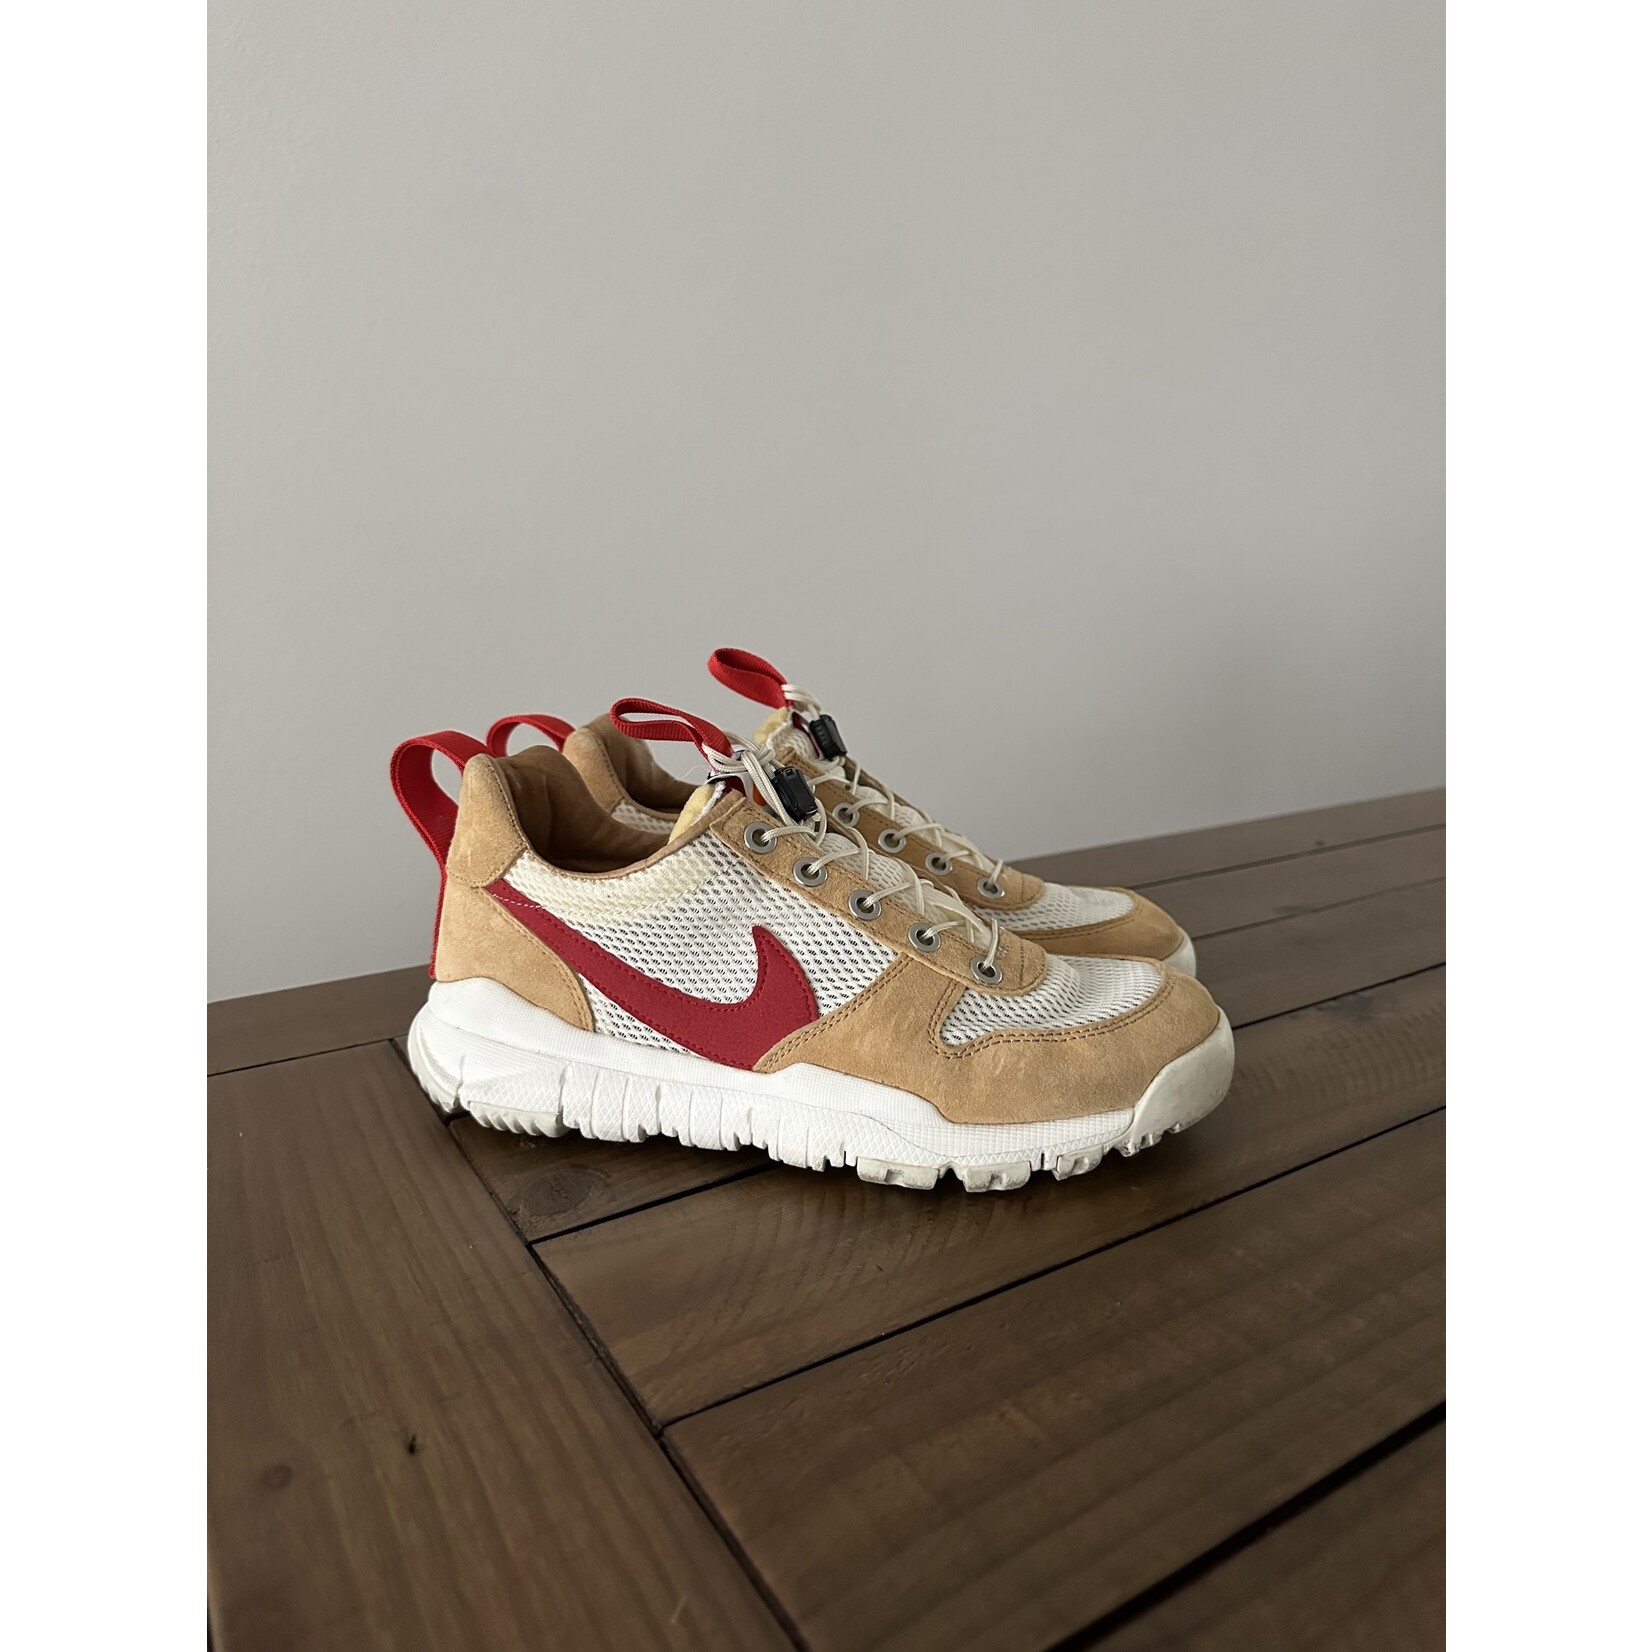 Nike Nike Mars Yard Shoe CUSTOM - Nike Mars Yard Overshoe + Nike SFB Boot Size 8, PREOWNED NO BOX